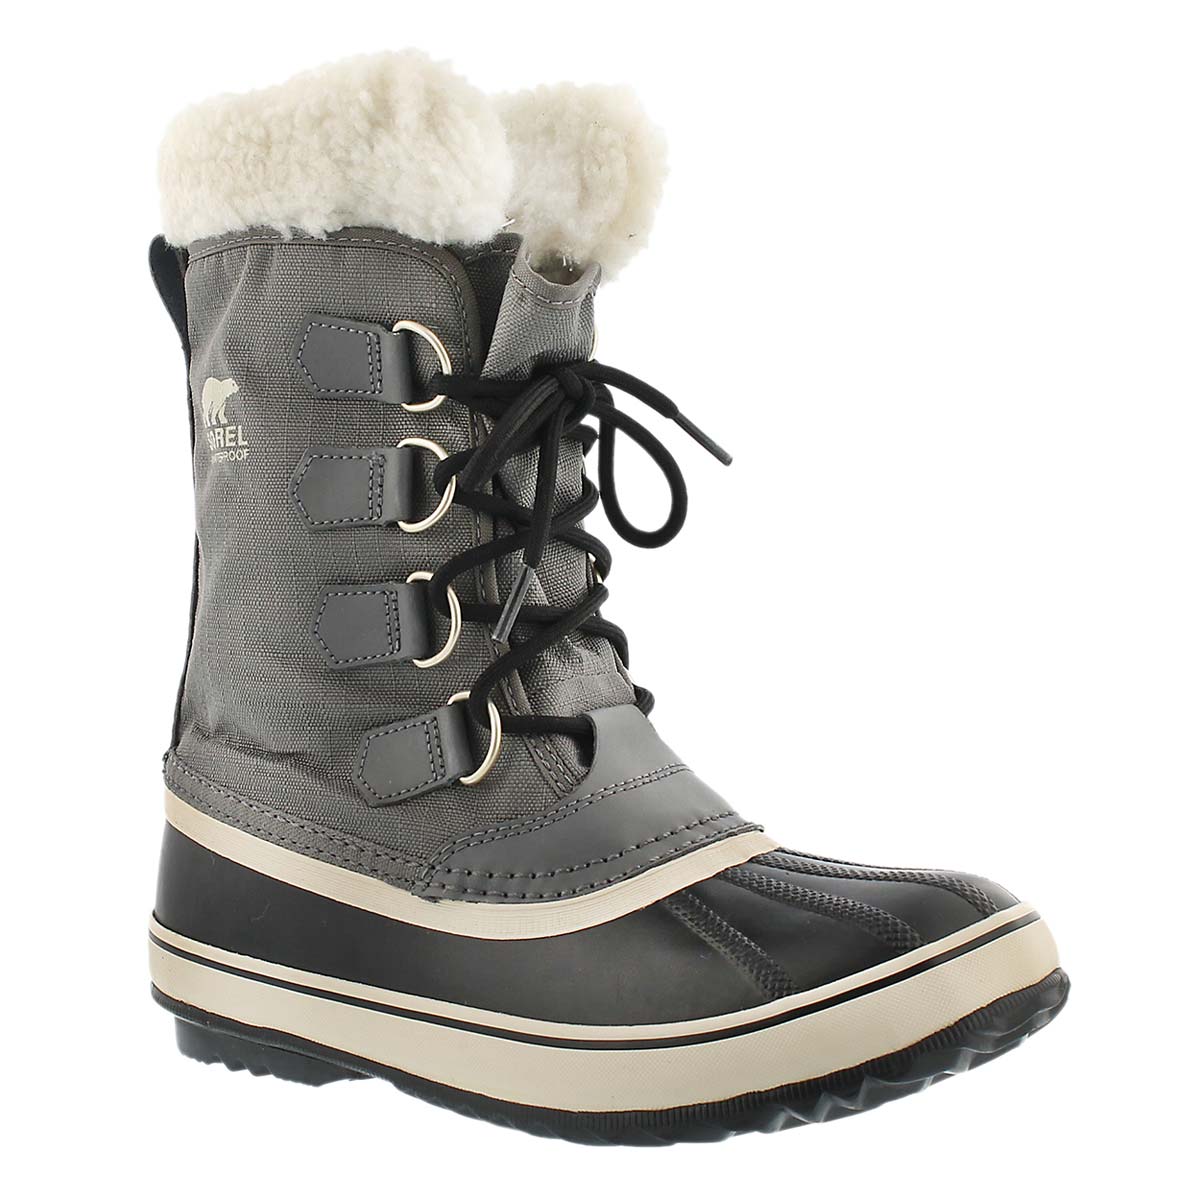 Buy > winter boots sale women's > in stock